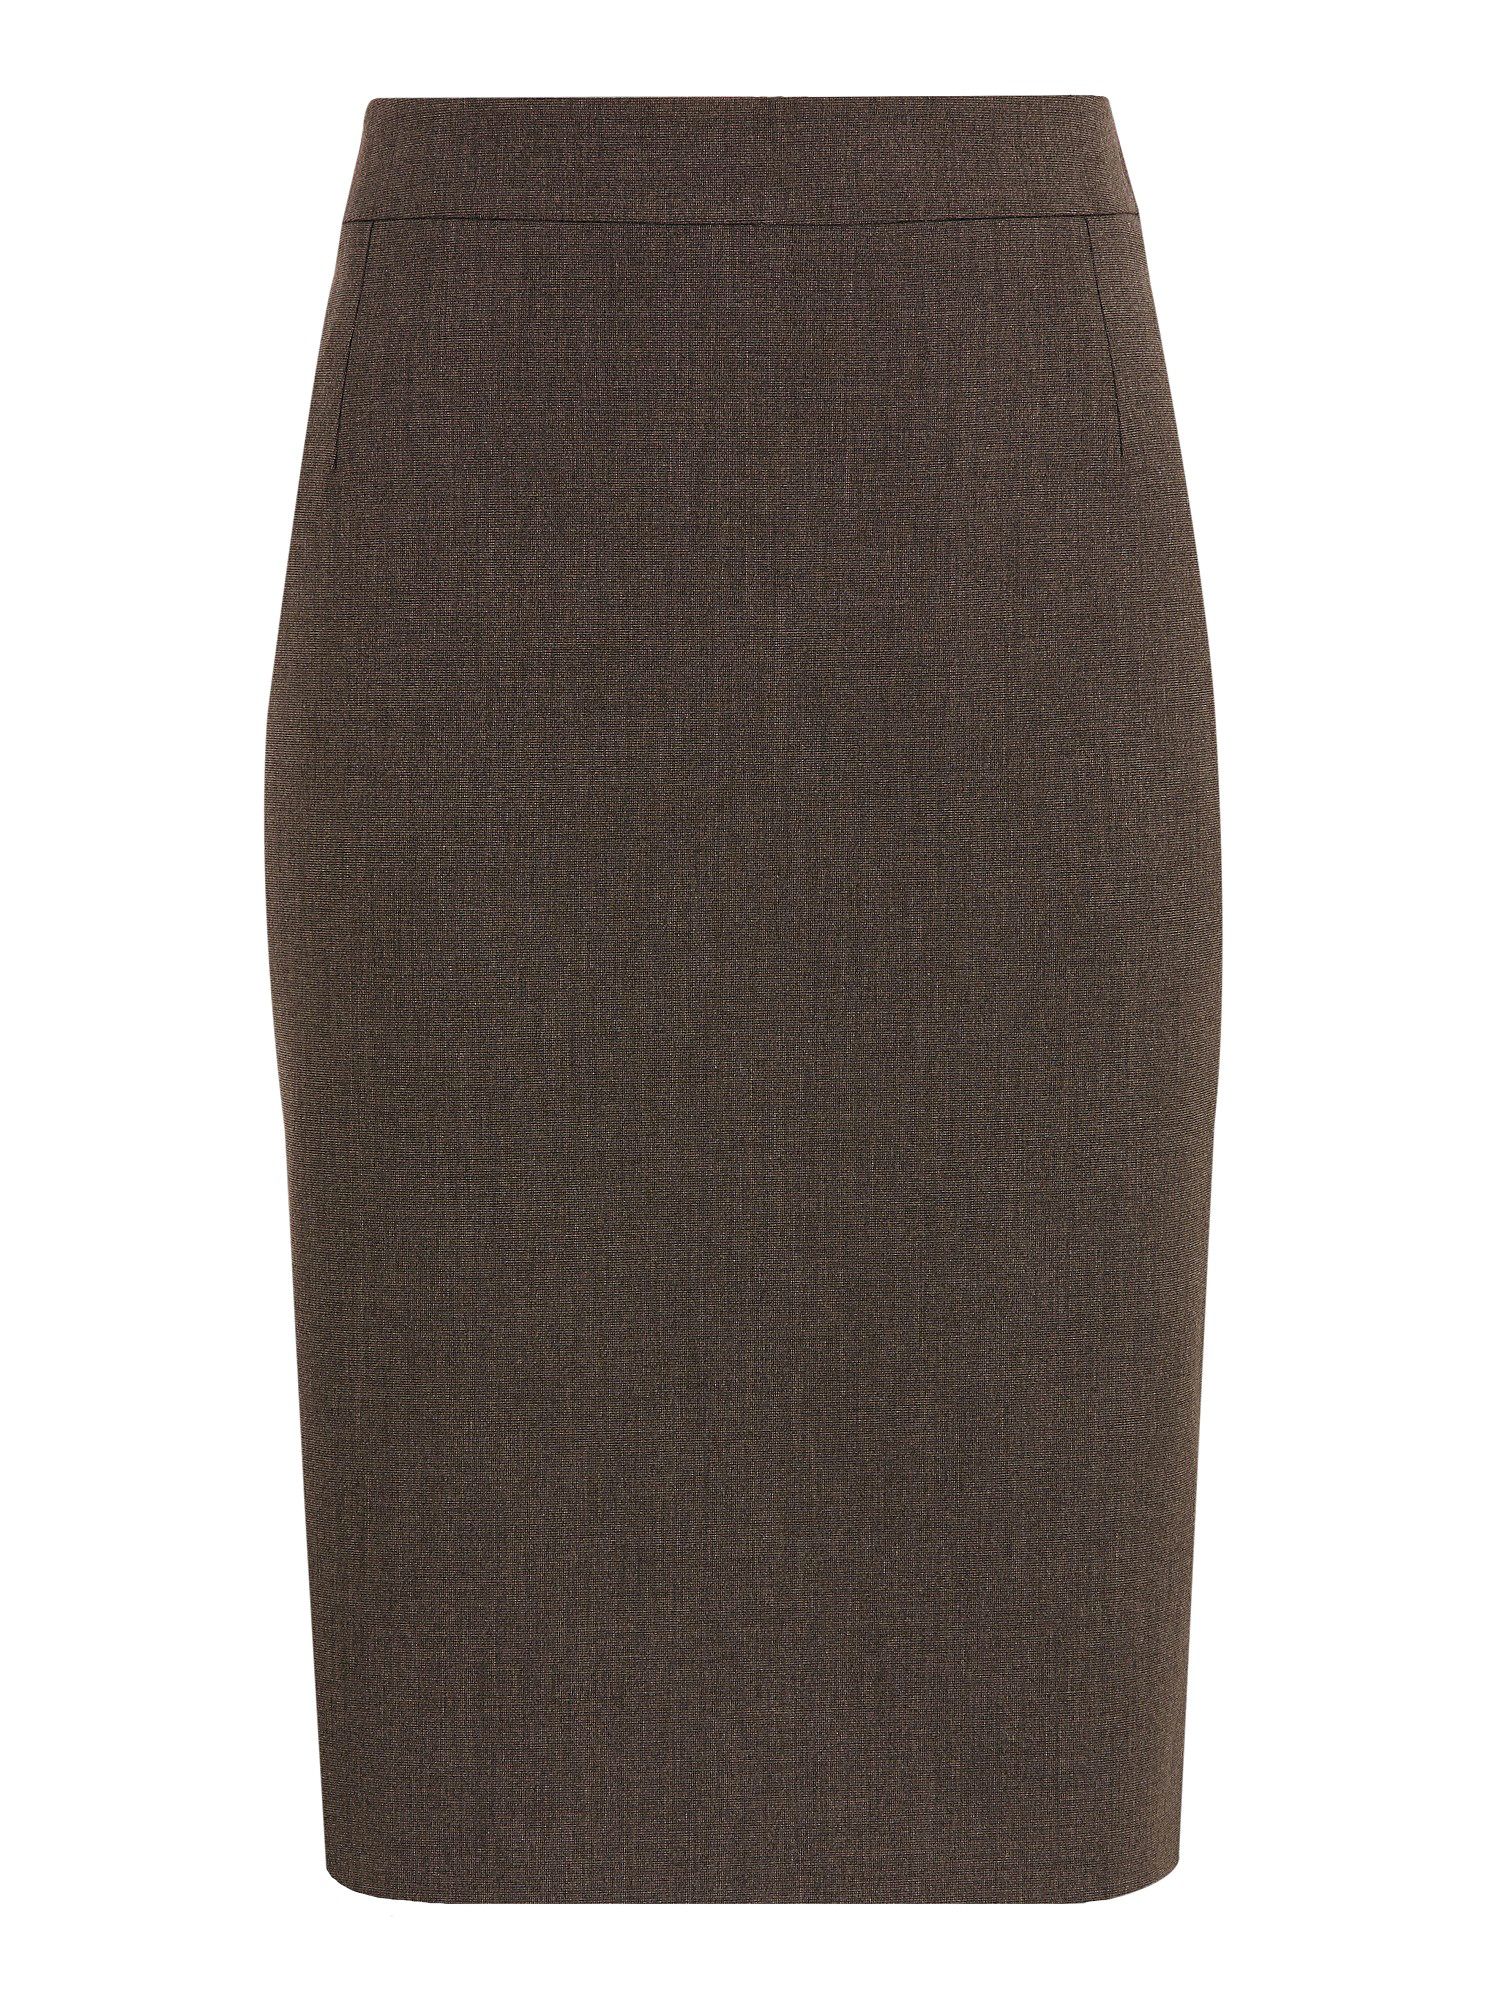 brown pencil skirt - skirts FFZFLEI